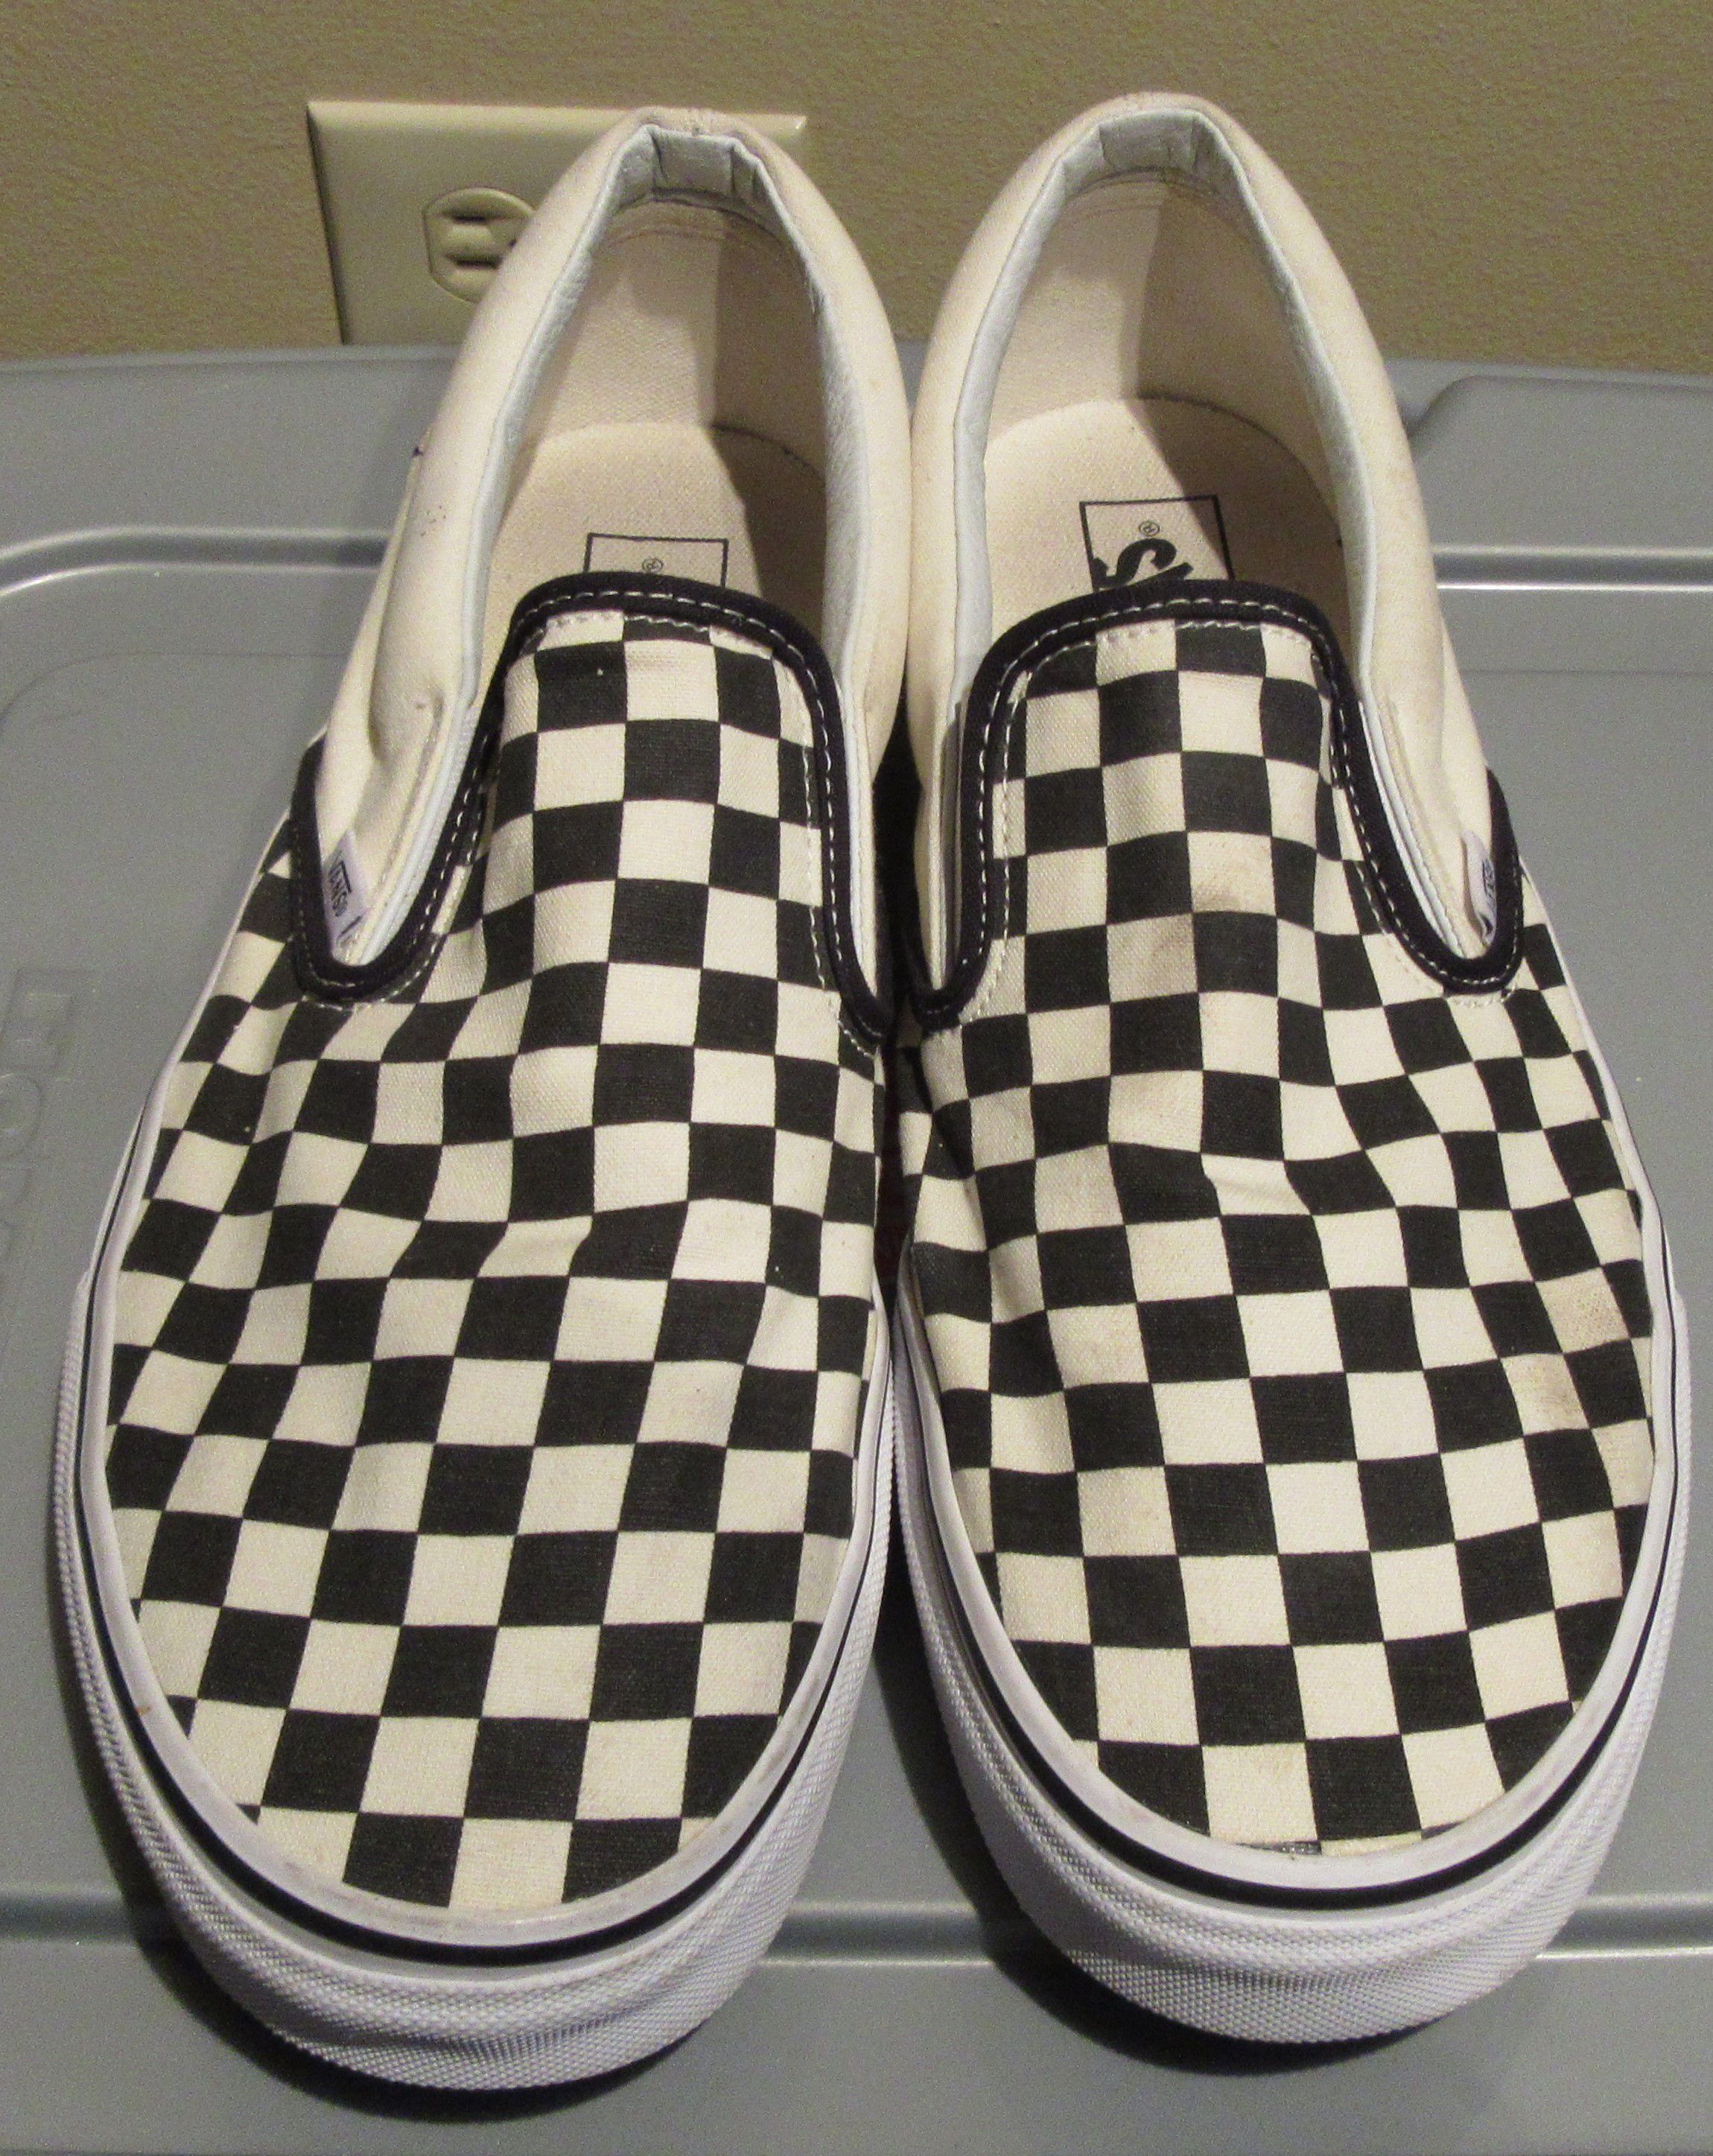 Vans Classic Slip-On - Black/White Checkerboard Canvas -Mens Size 13